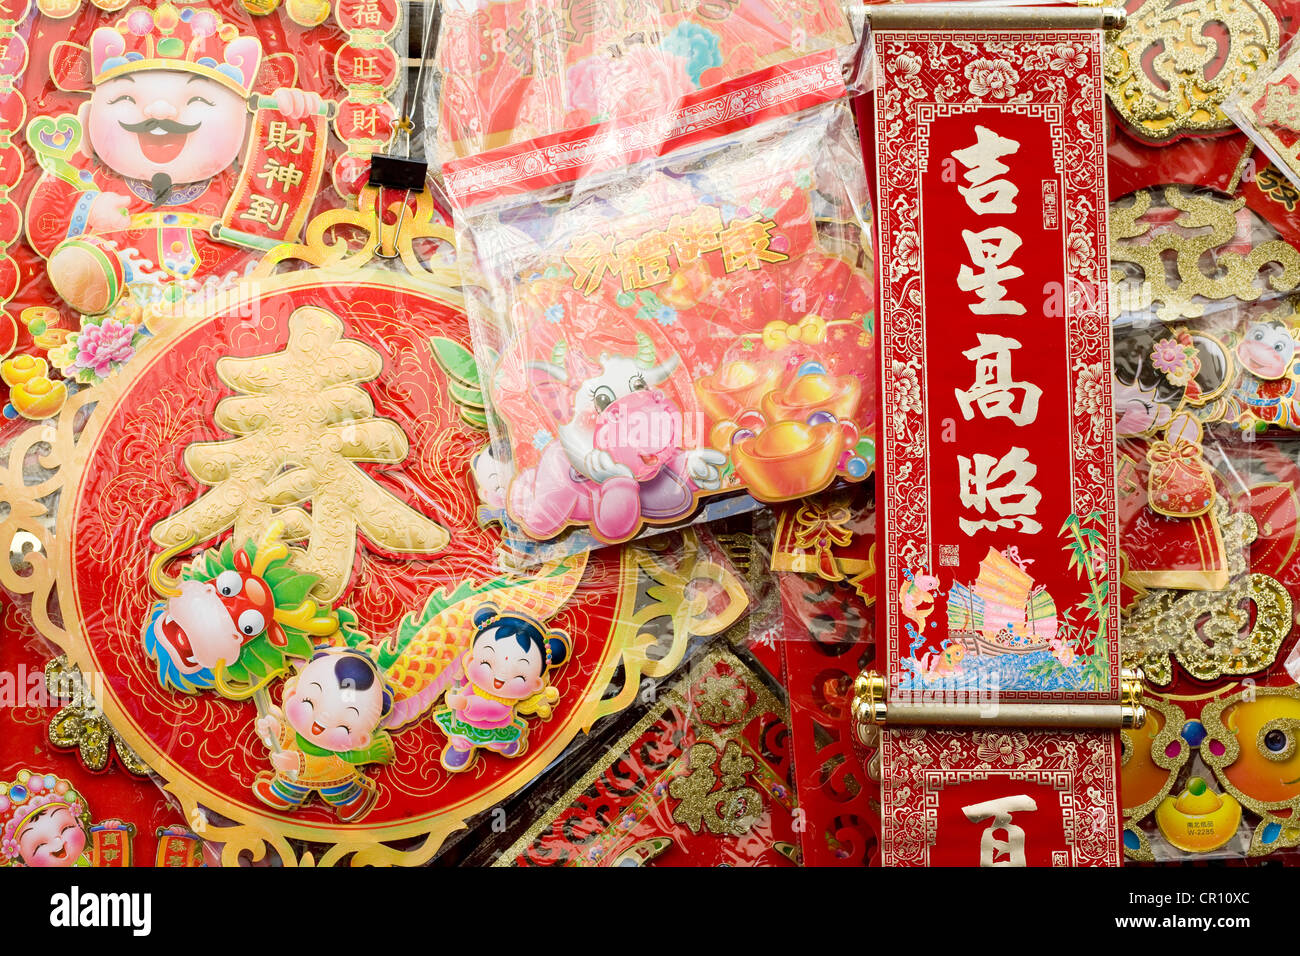 China, Hong Kong, mercado, vendiendo adornos para año nuevo chino Foto de stock